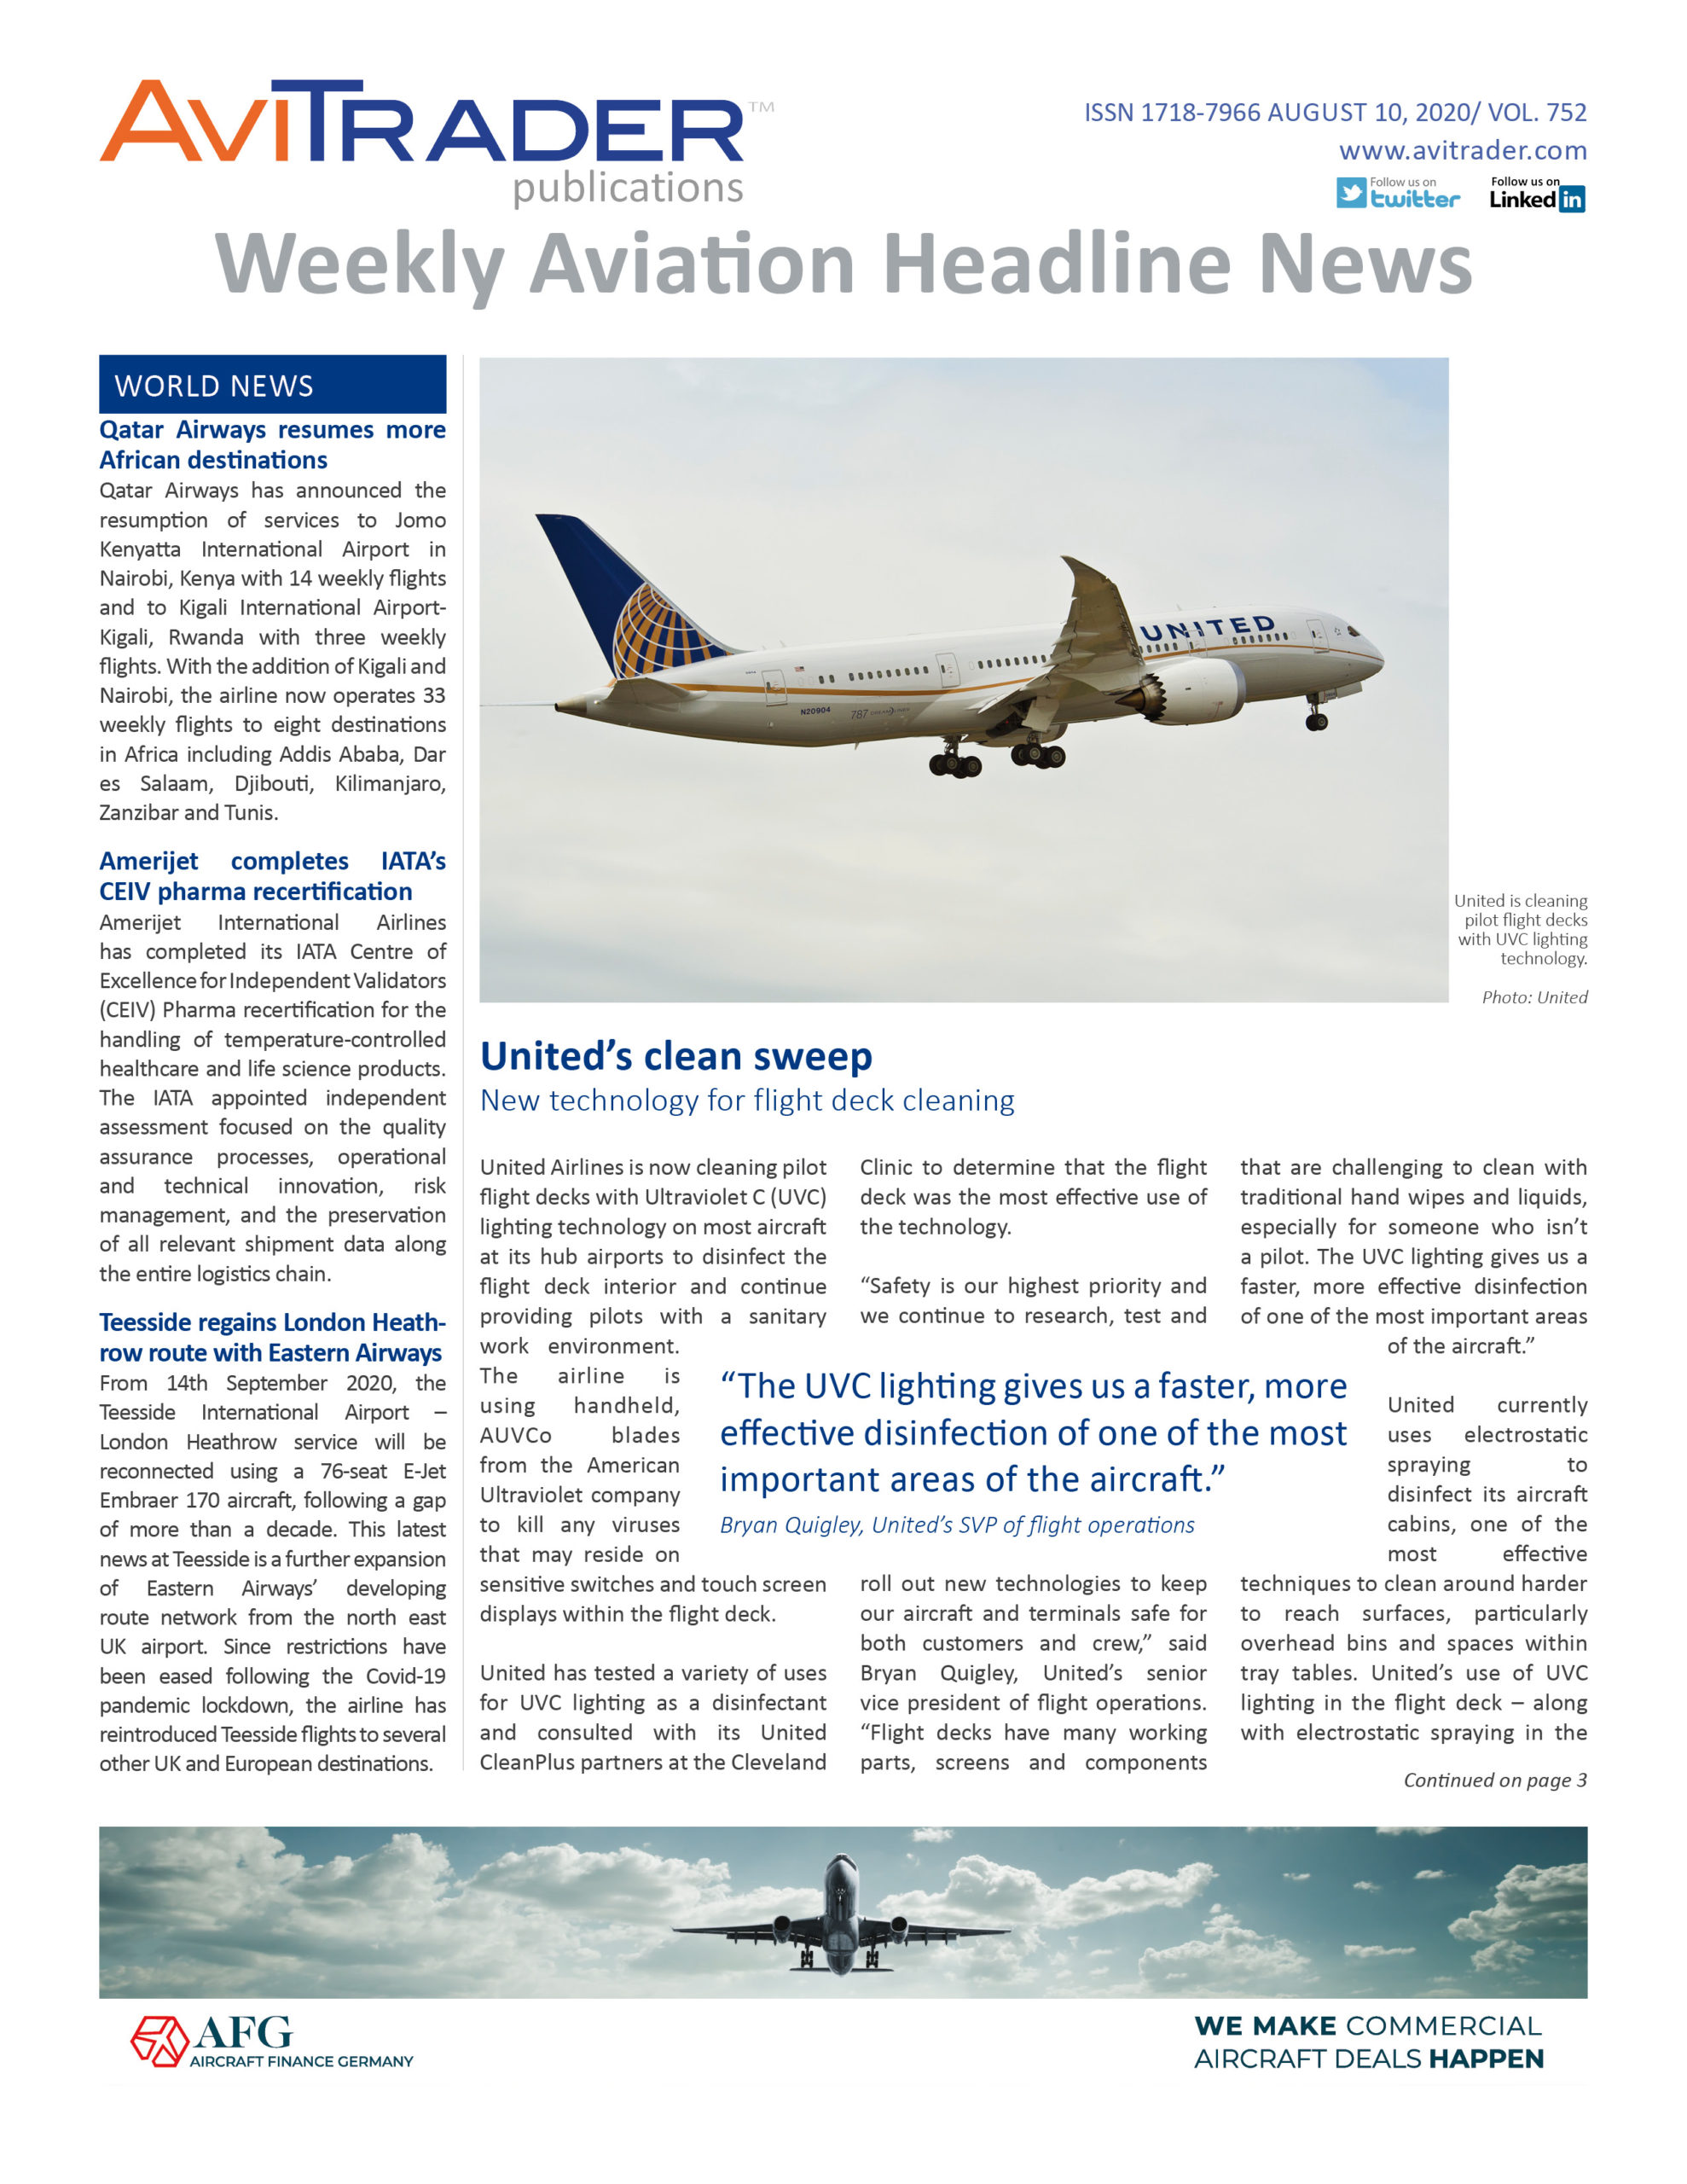 AviTrader_Weekly_Headline_News_Cover_2020-08-10